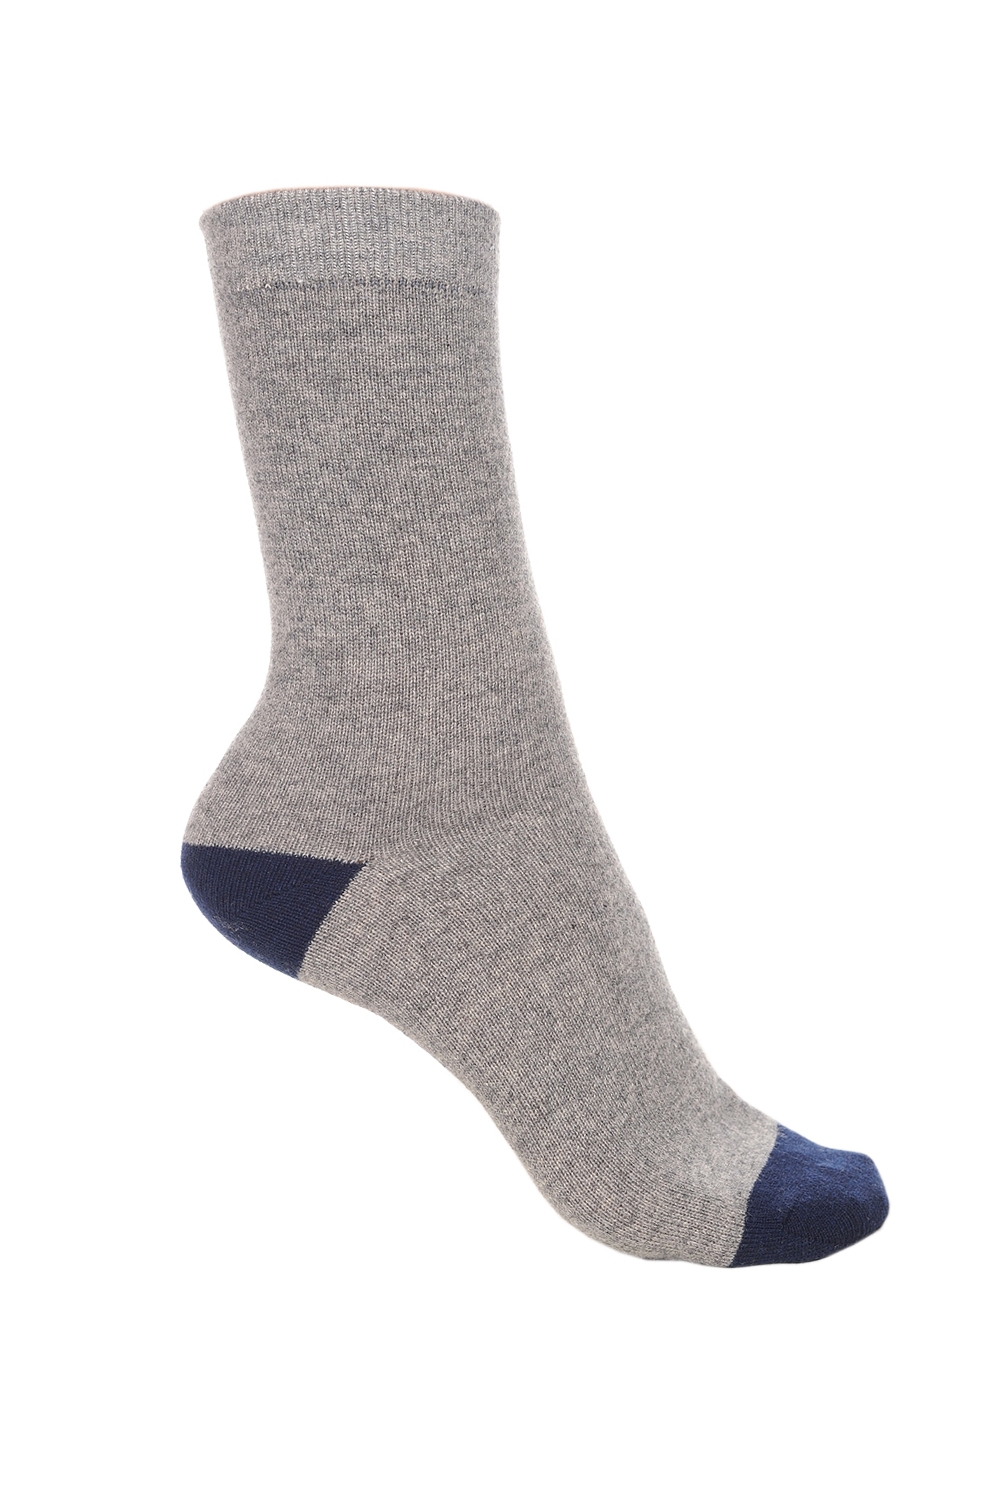 Cashmere & Elastane accessories socks frontibus grey marl dress blue 9 11